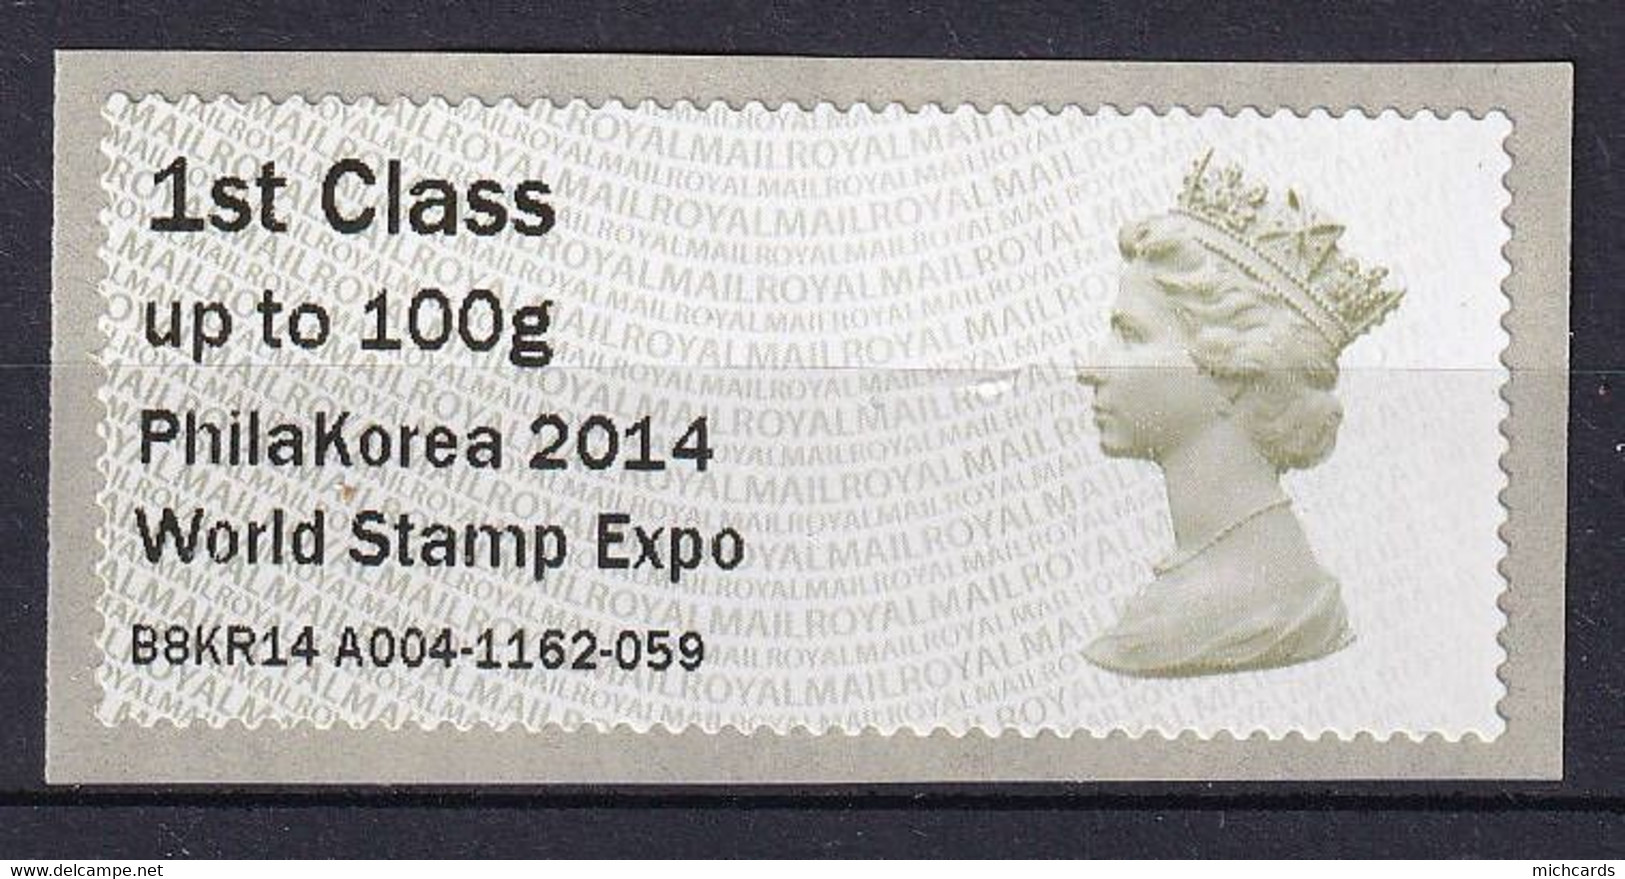 203 GRANDE BRETAGNE 2014 - Distributeur Adhesif - 1 St Class 100g  PhilaKorea - Neuf ** (MNH) Sans Charniere - Post & Go Stamps